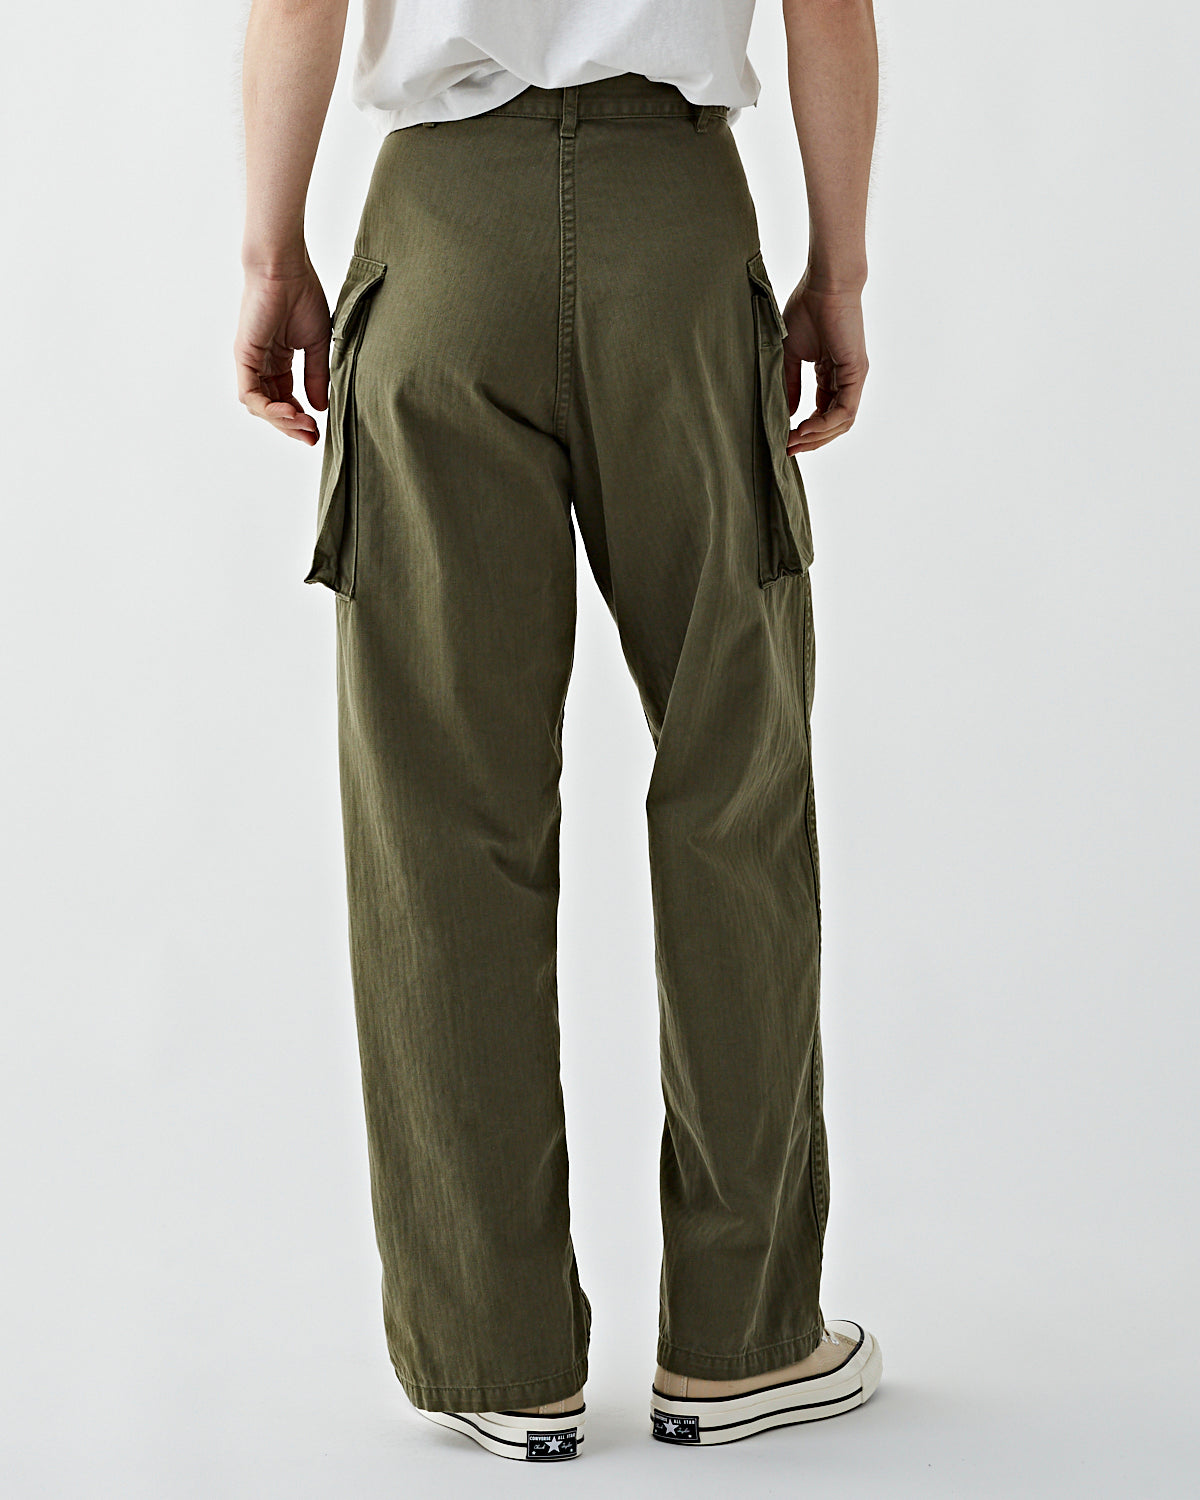 Army Green Cargo Pants Women Gothic Punk Style Jeans Techwear Hip Hop Baggy  Jogger Streetwear Trousers  Kilts Boutique